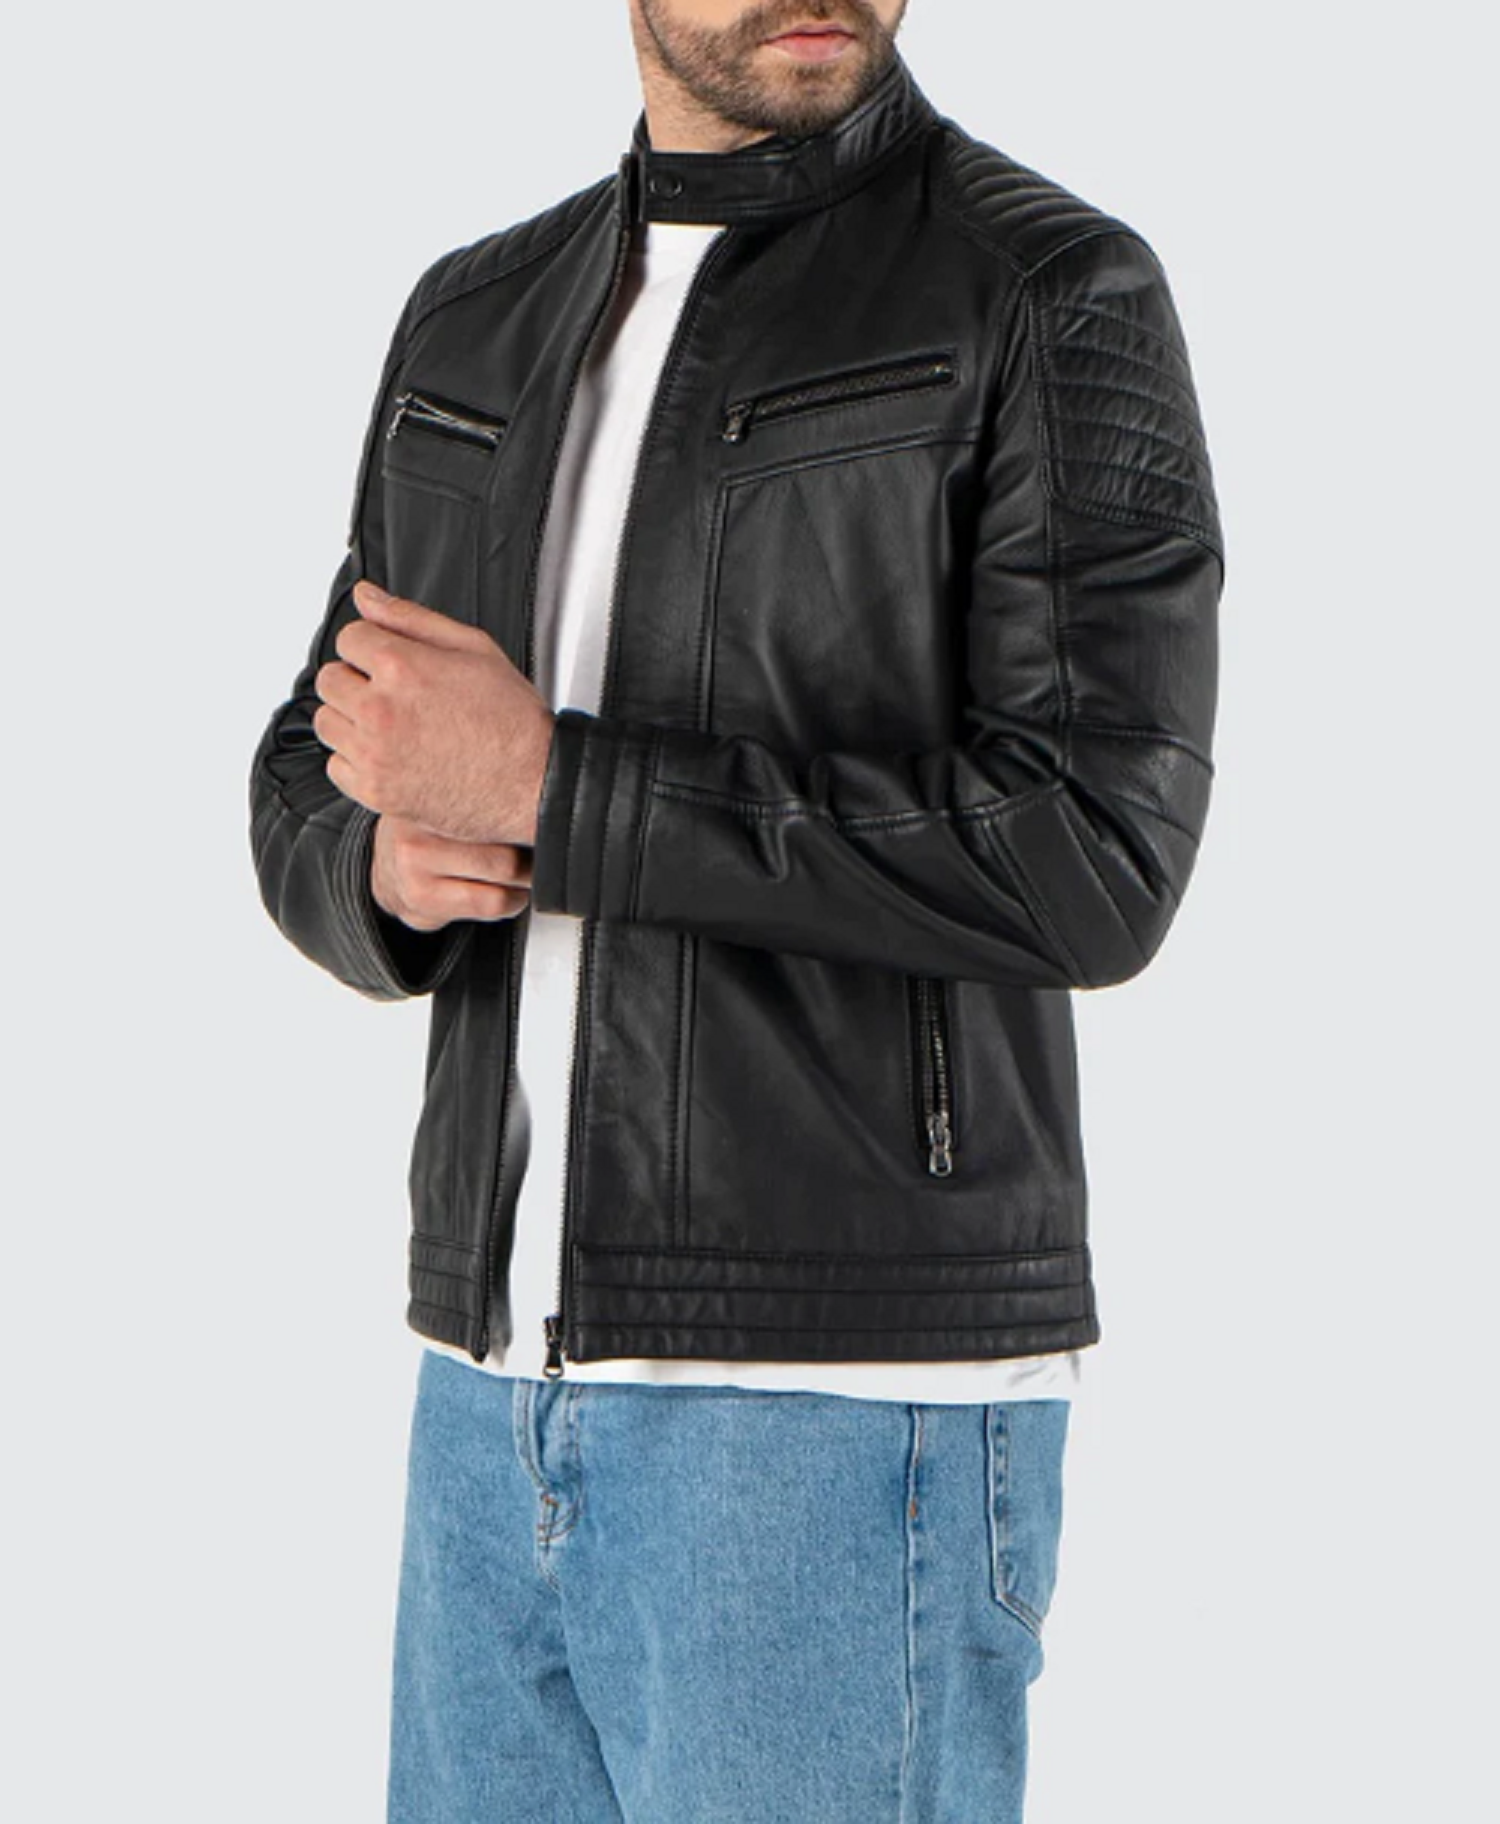 Elegance Meets Edge: JINUS Arturo Genuine Leather Black Men's Coat Jacket!